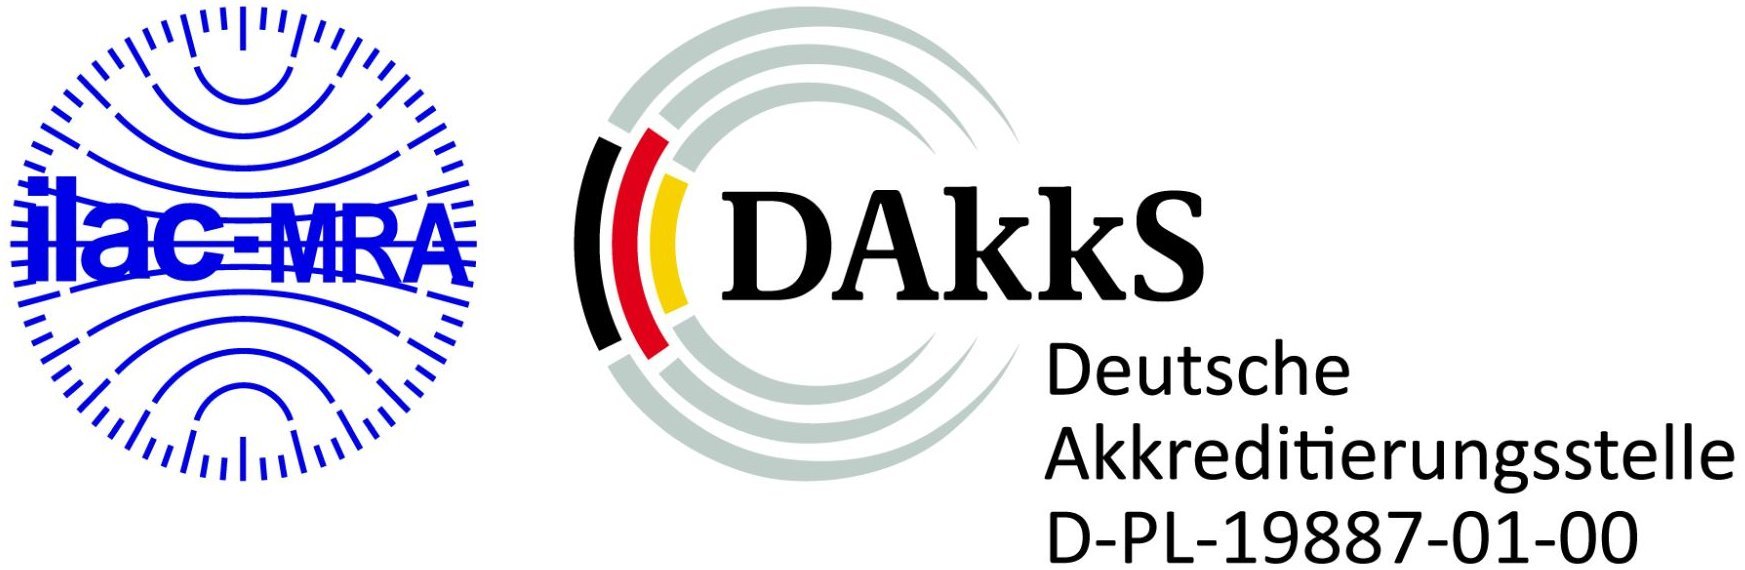 DAkkS Symbol 19887-01